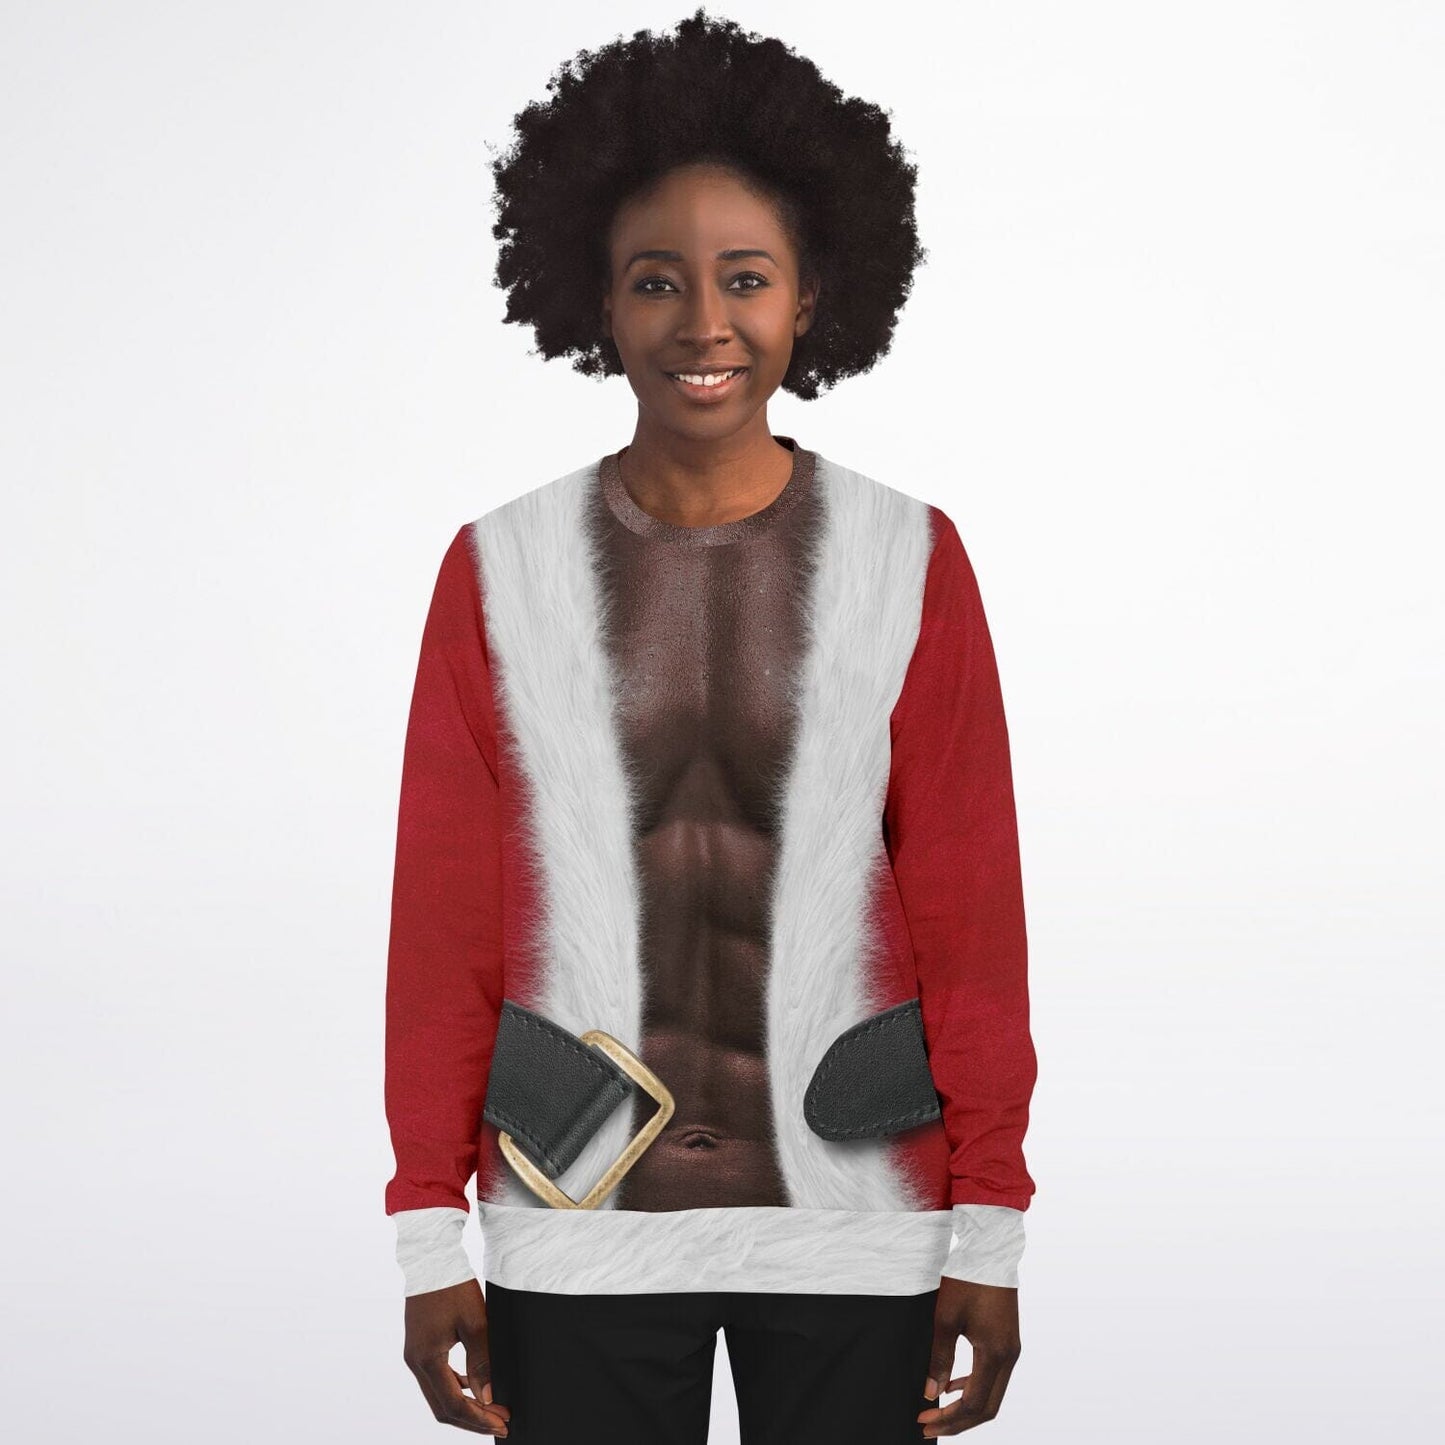 Fit Santa 2 Ugly Christmas Sweatshirt Fashion Sweatshirt - AOP Subliminator 